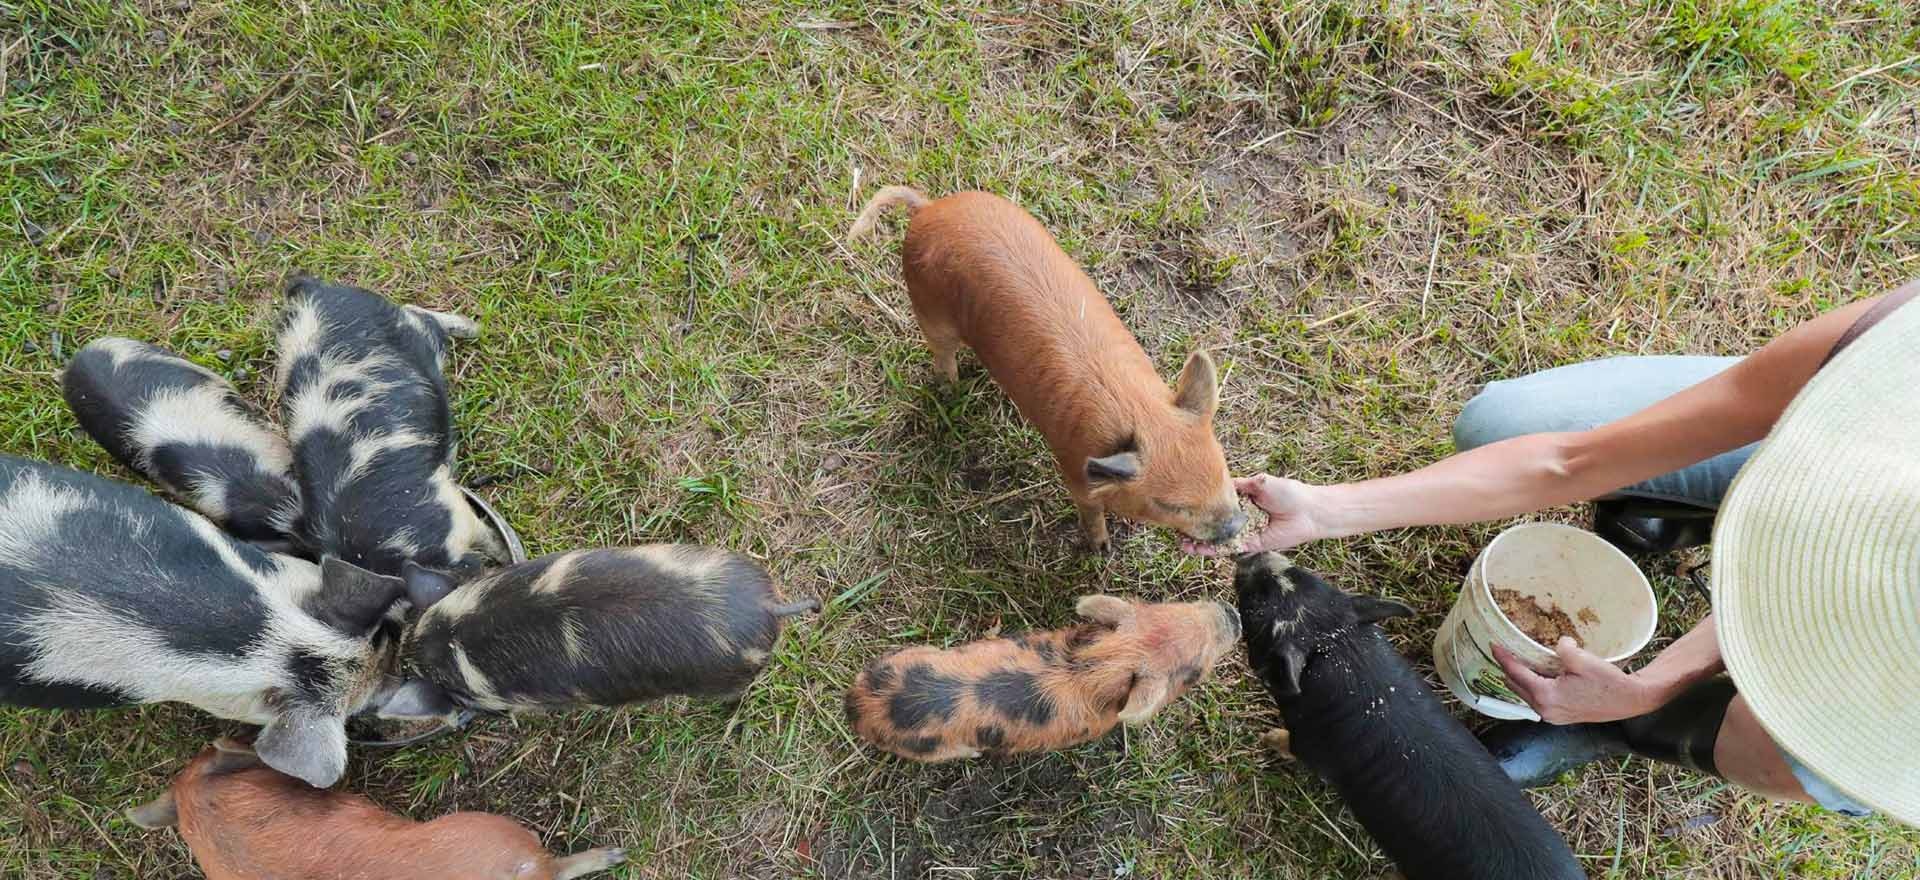 Piggies at Heartwood Farm